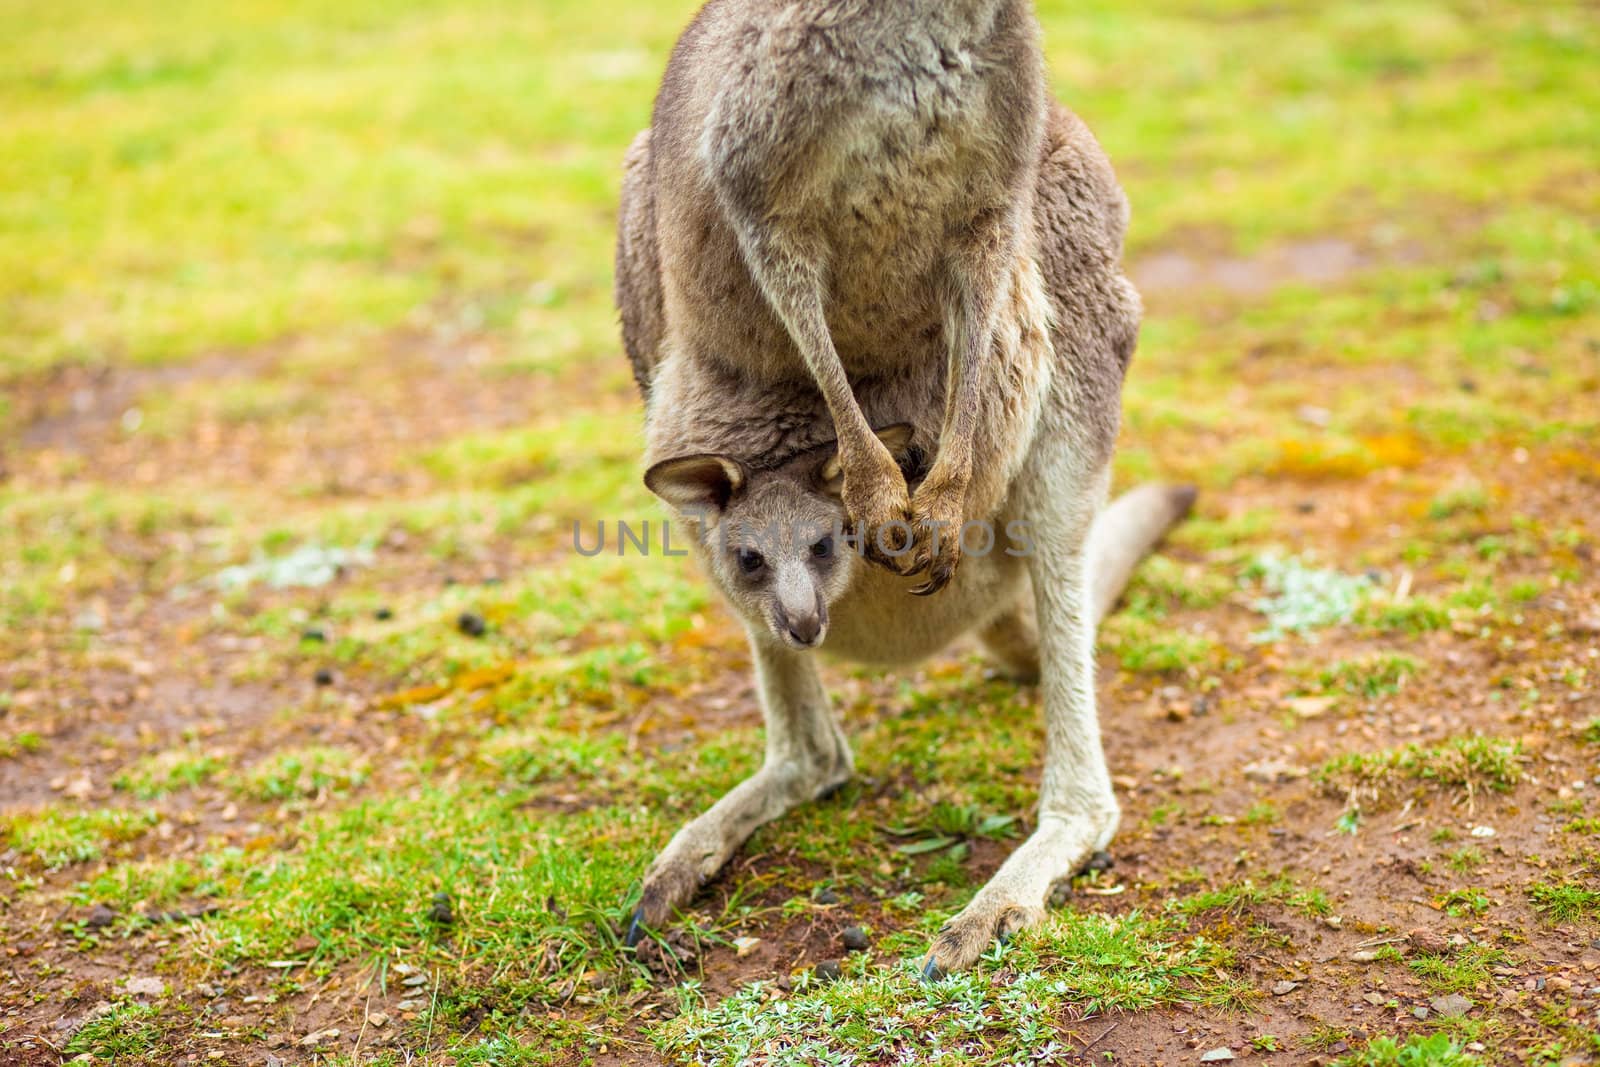 Kangaroo with baby by edan